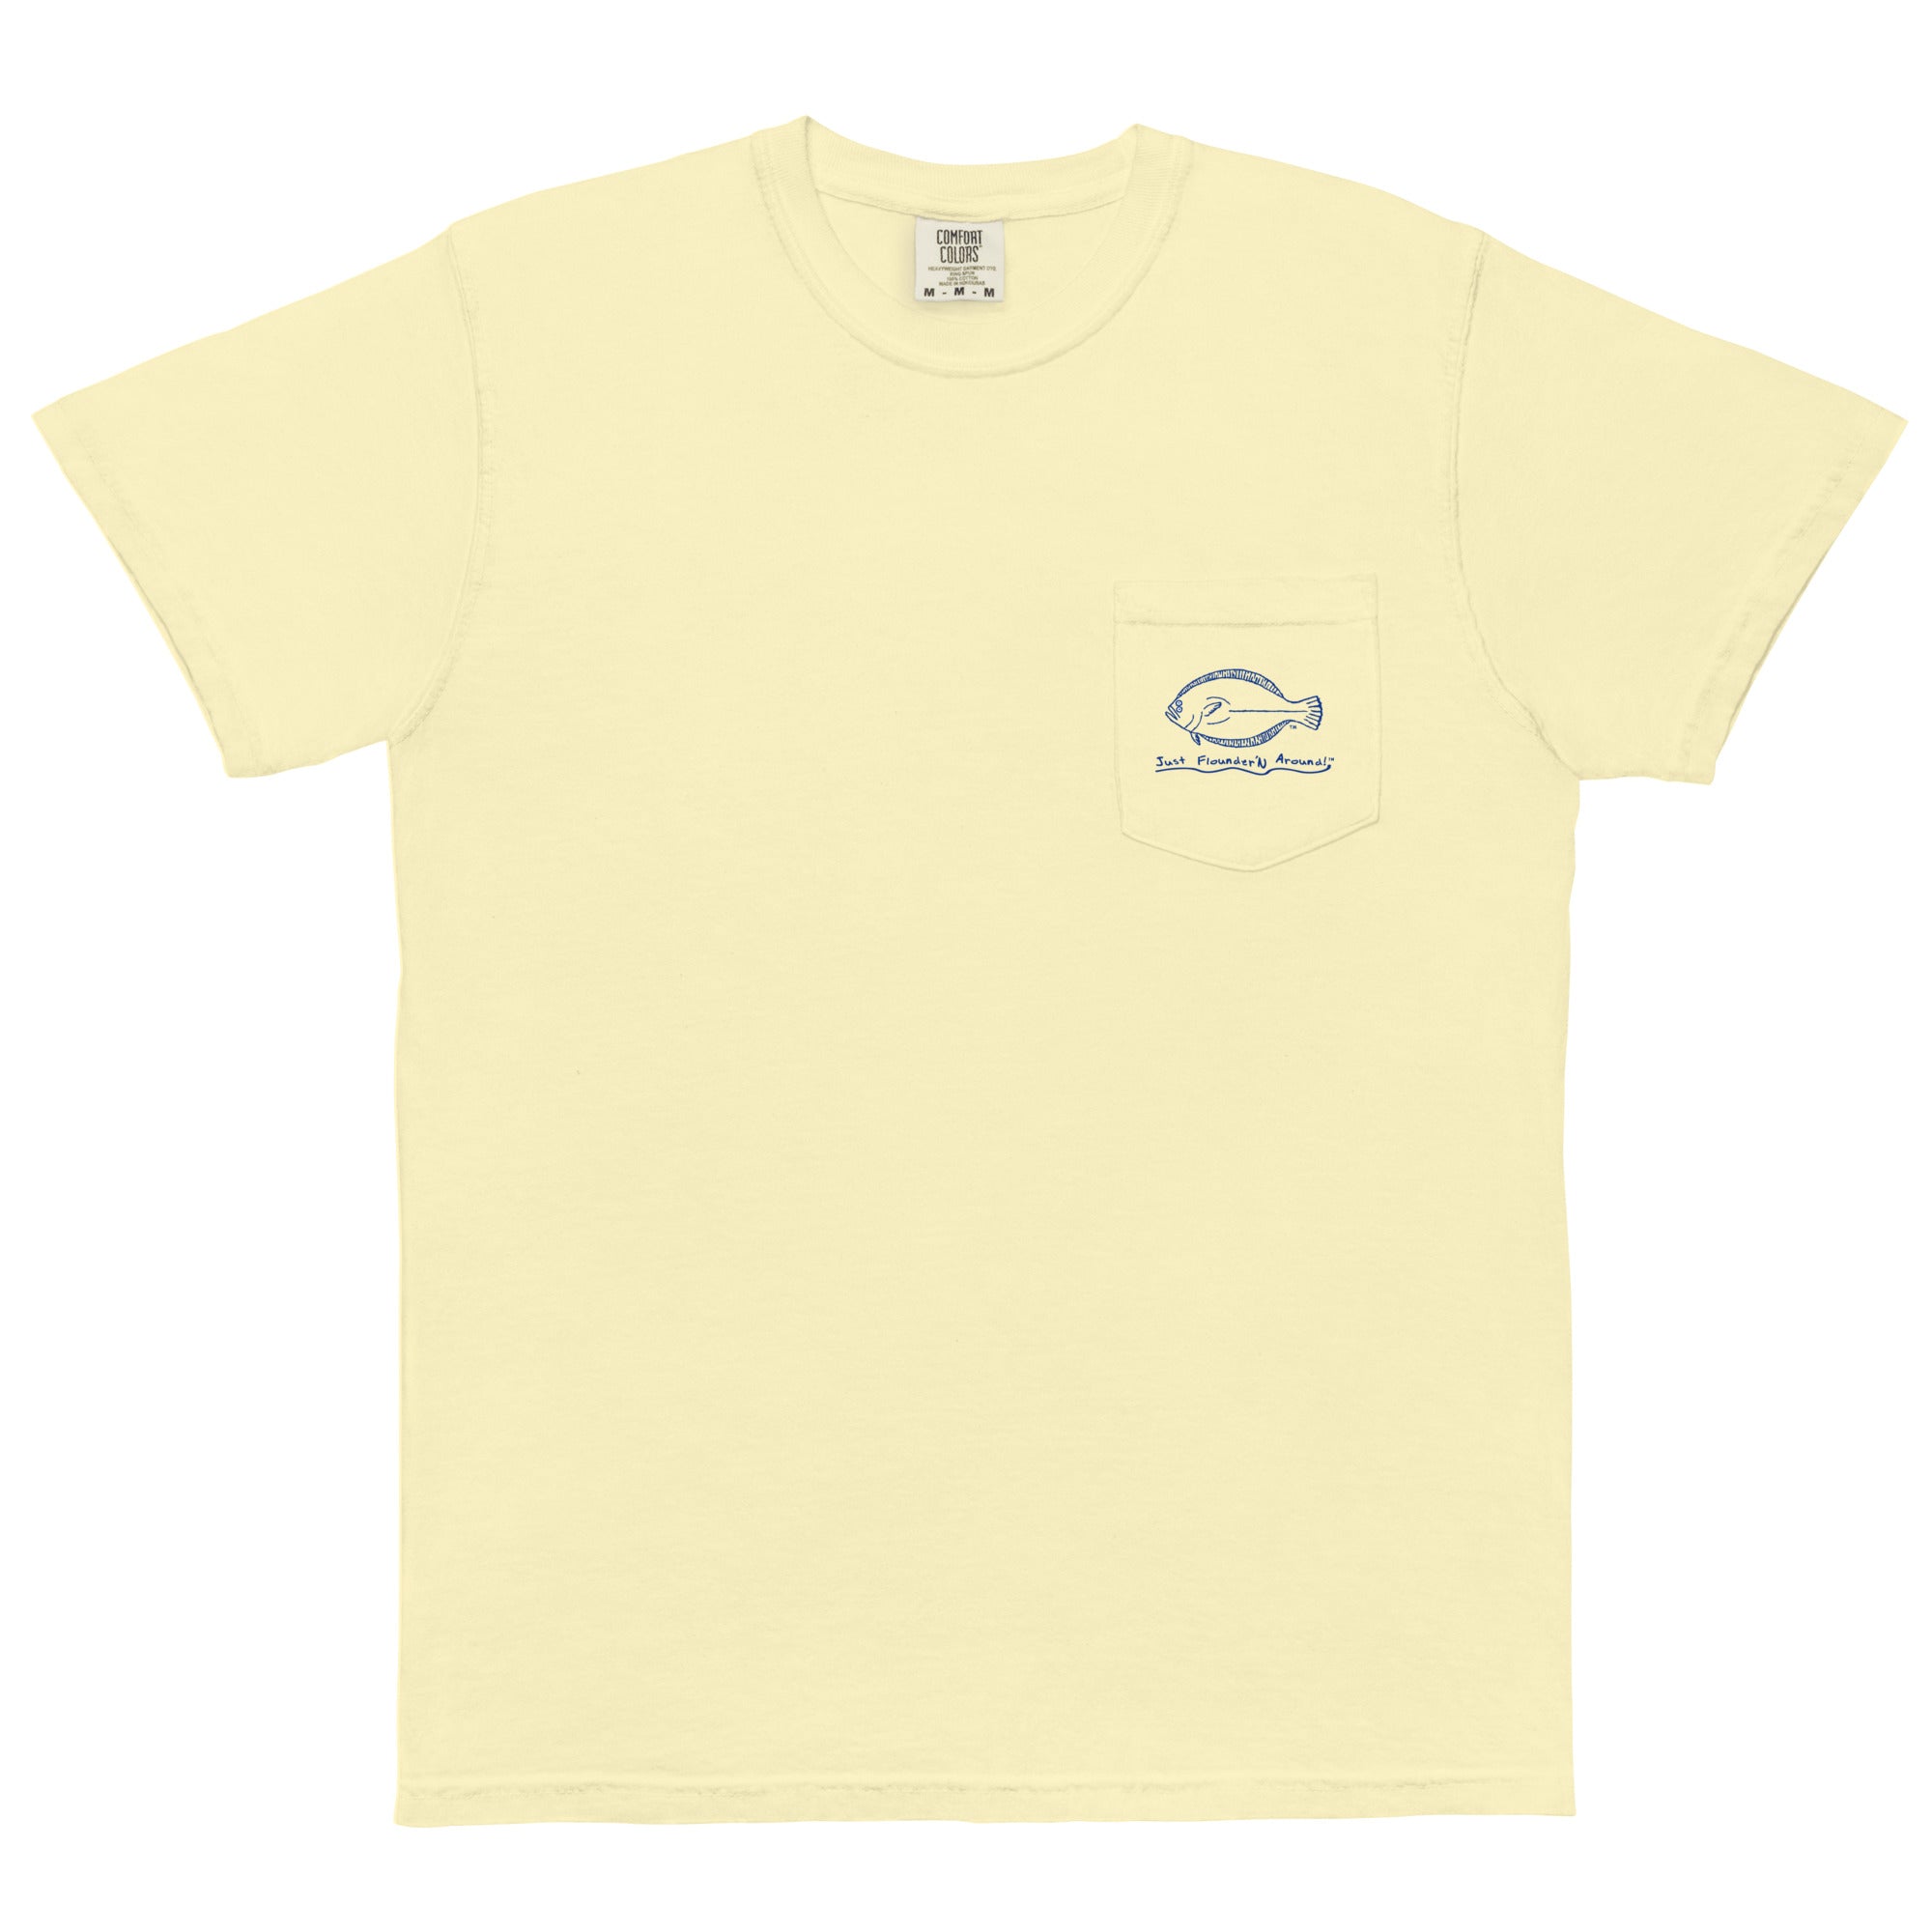 JFA ORIGINAL LOGO COLOR LIGHT YELLOW -  garment-dyed Pocket t-shirt